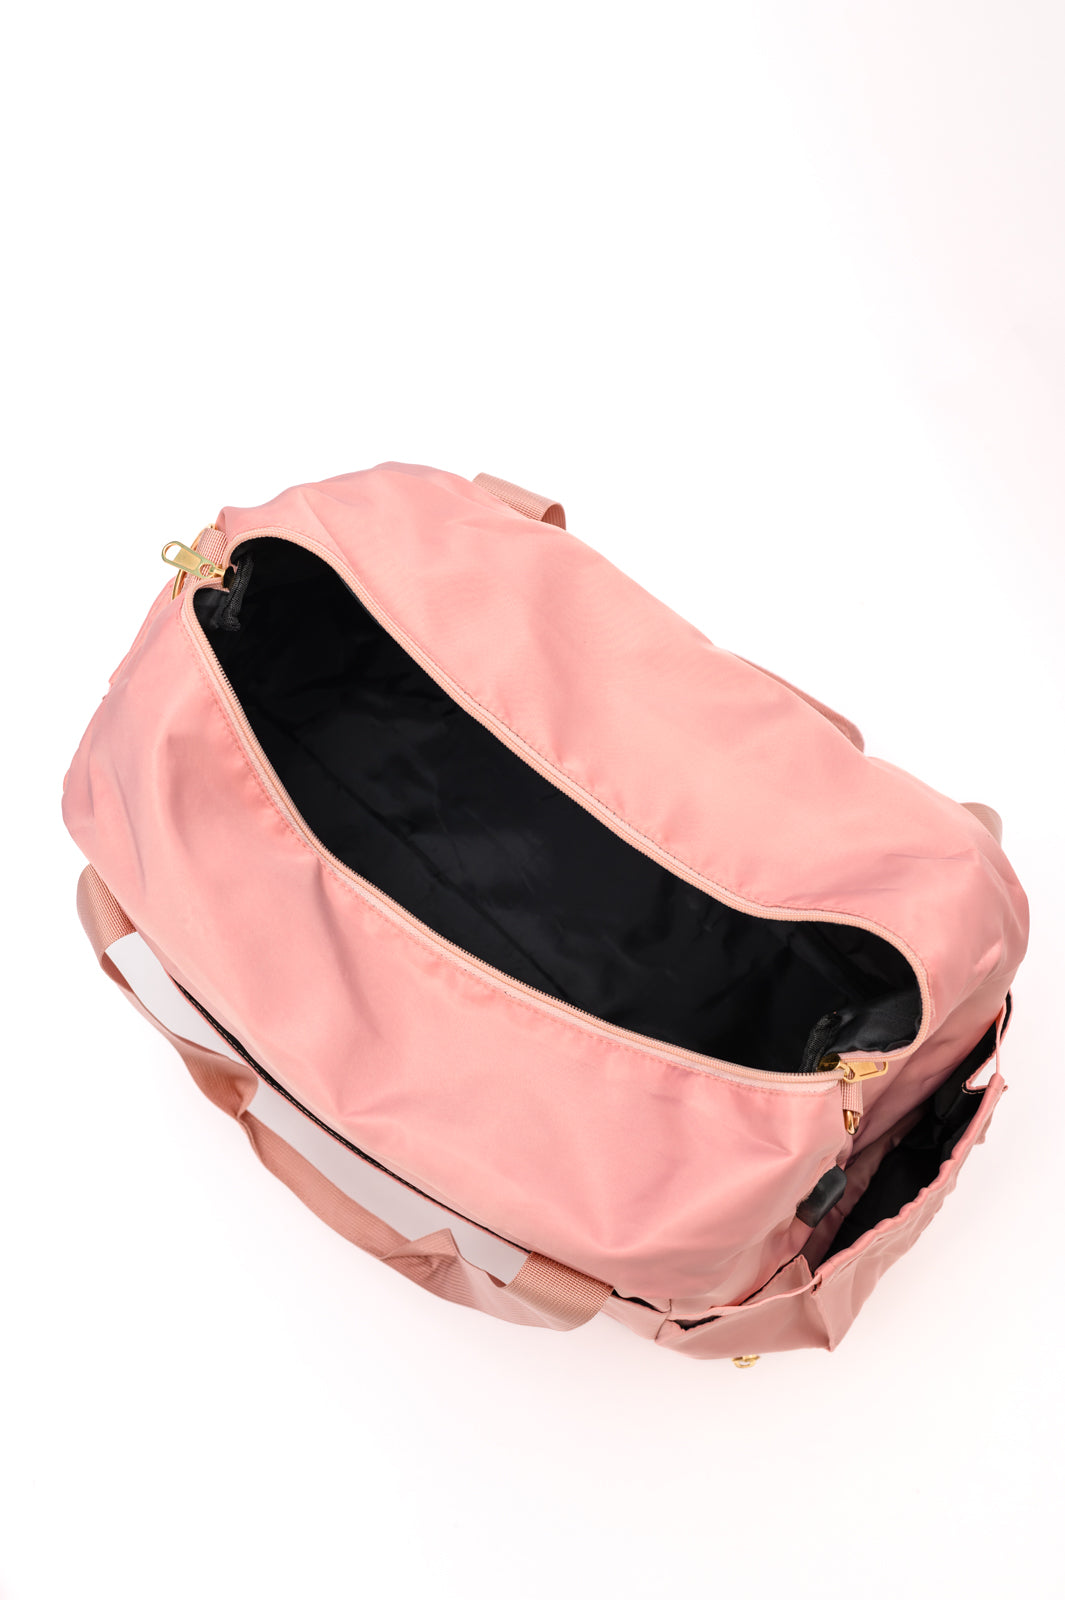 Madden Girl Weekend Duffel Bag in Pink